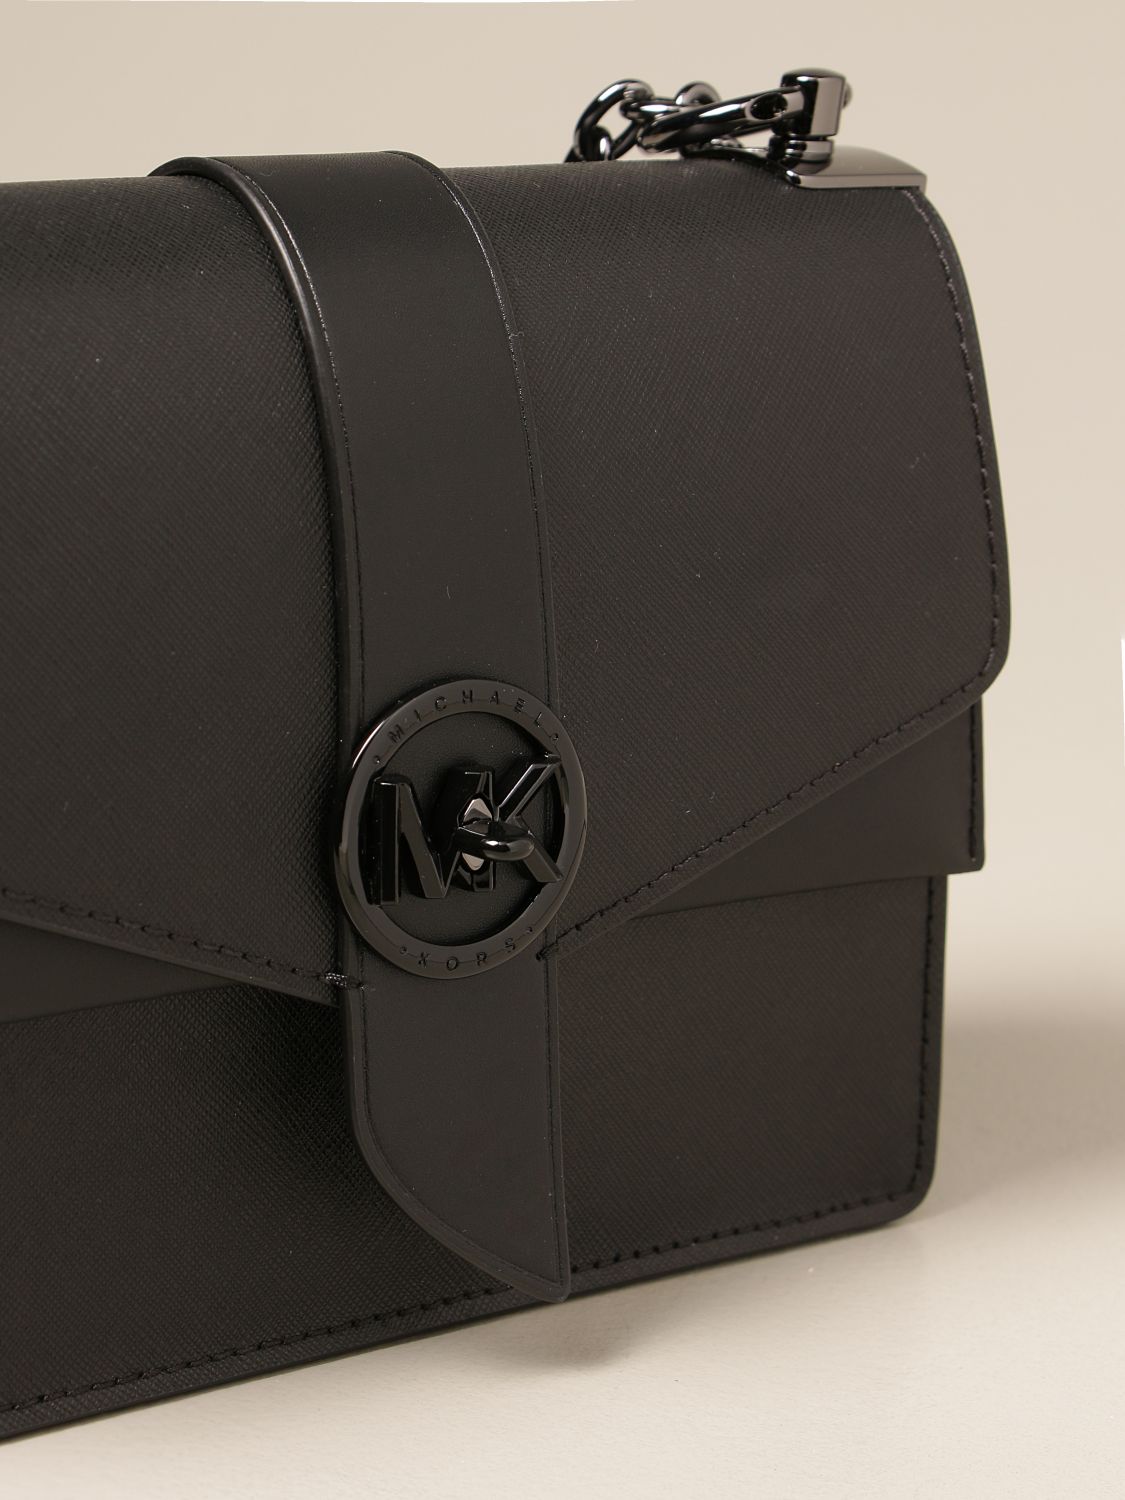 MICHAEL KORS: Michael Greenwich bag in saffiano leather - Black